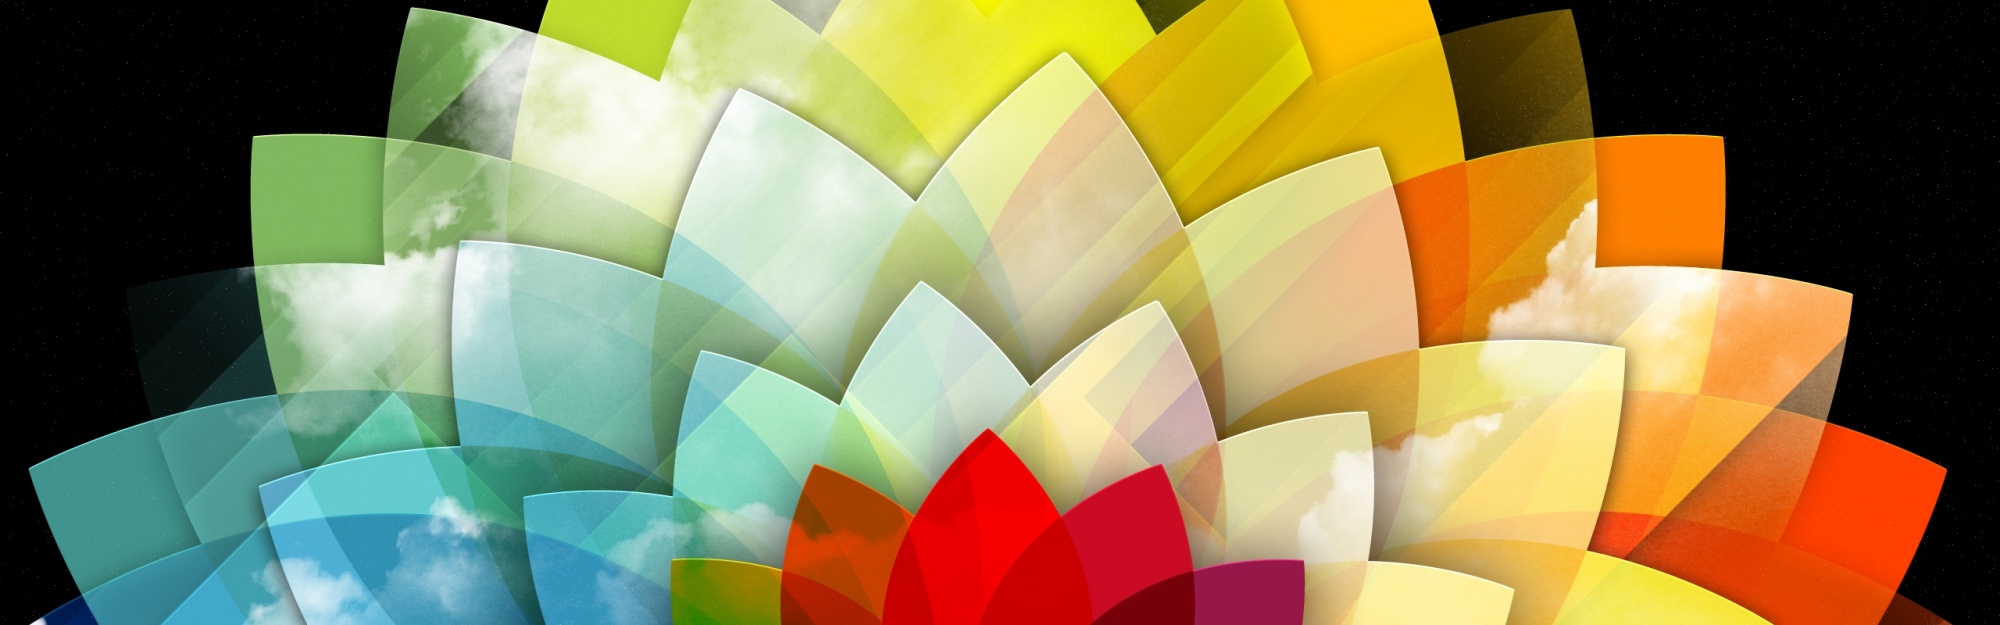 Digital Art Multicolored Flower